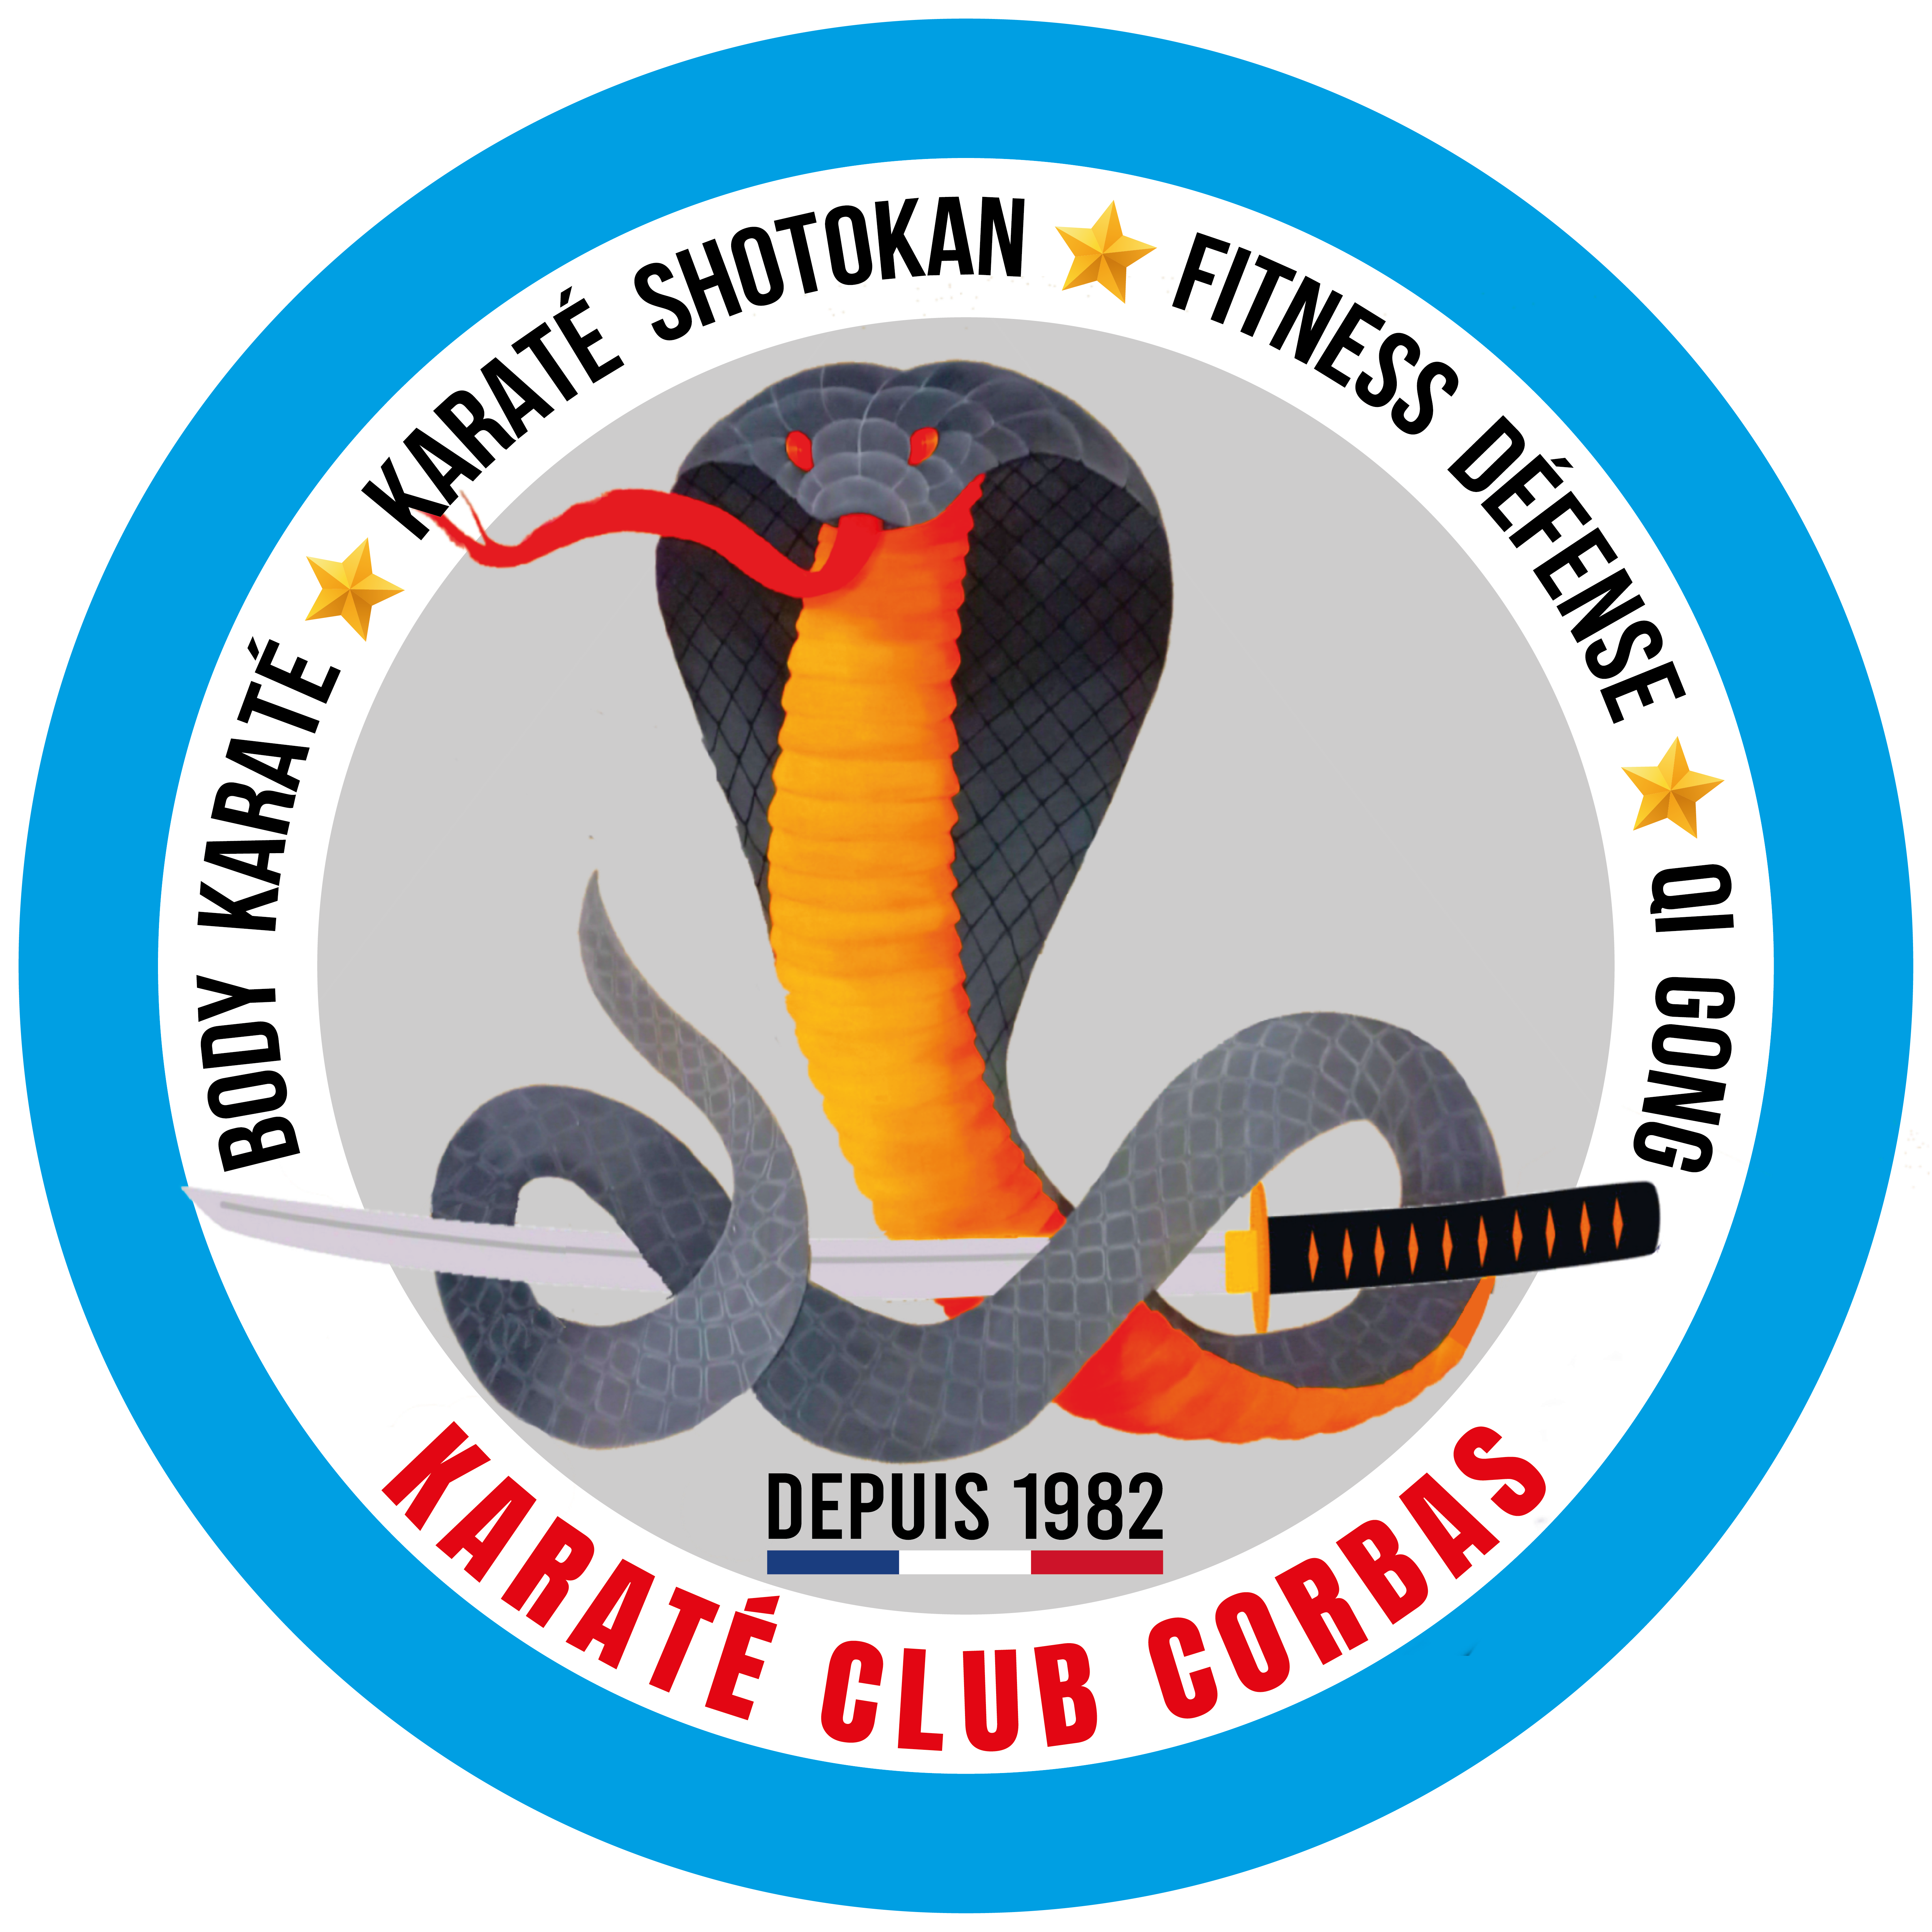 Karaté Club Corbas Logo